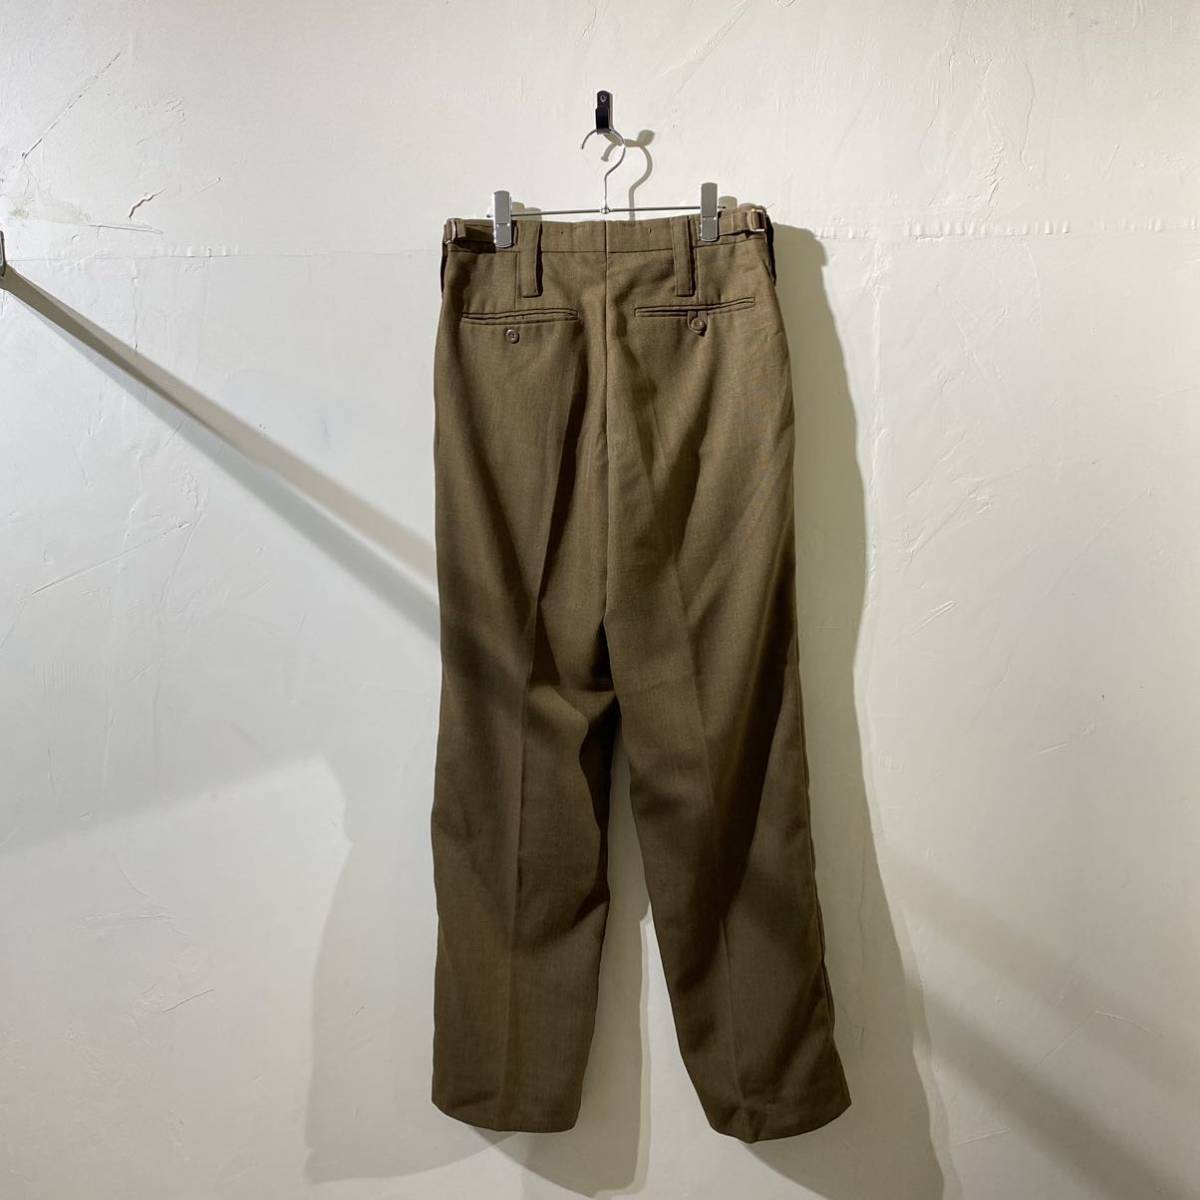 vintage military wool poly dress brown pants イギリス軍 古着 ミリタリー ウールポリドレスブラウンパンツ 軍物 ビンテージ_画像8